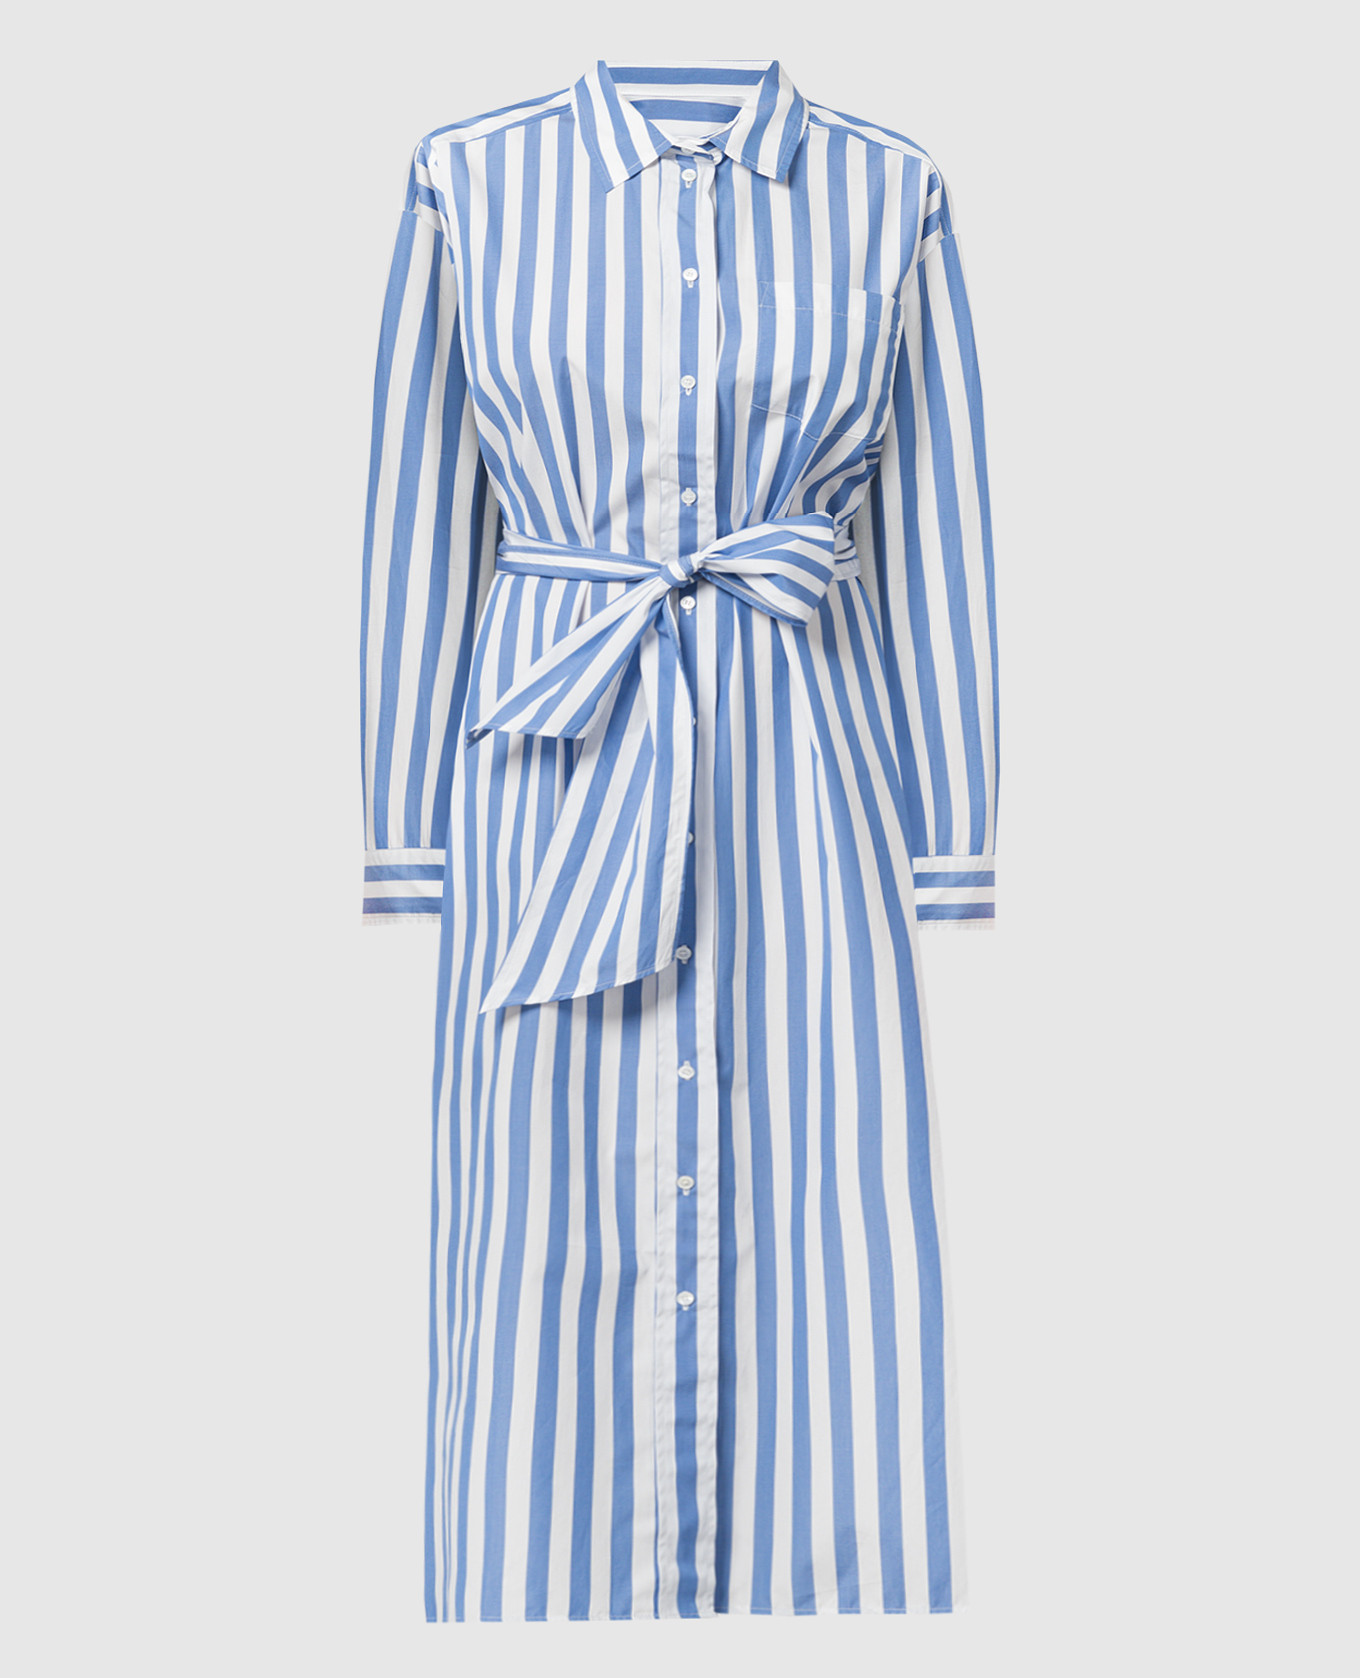 FALASCO blue striped shirt dress